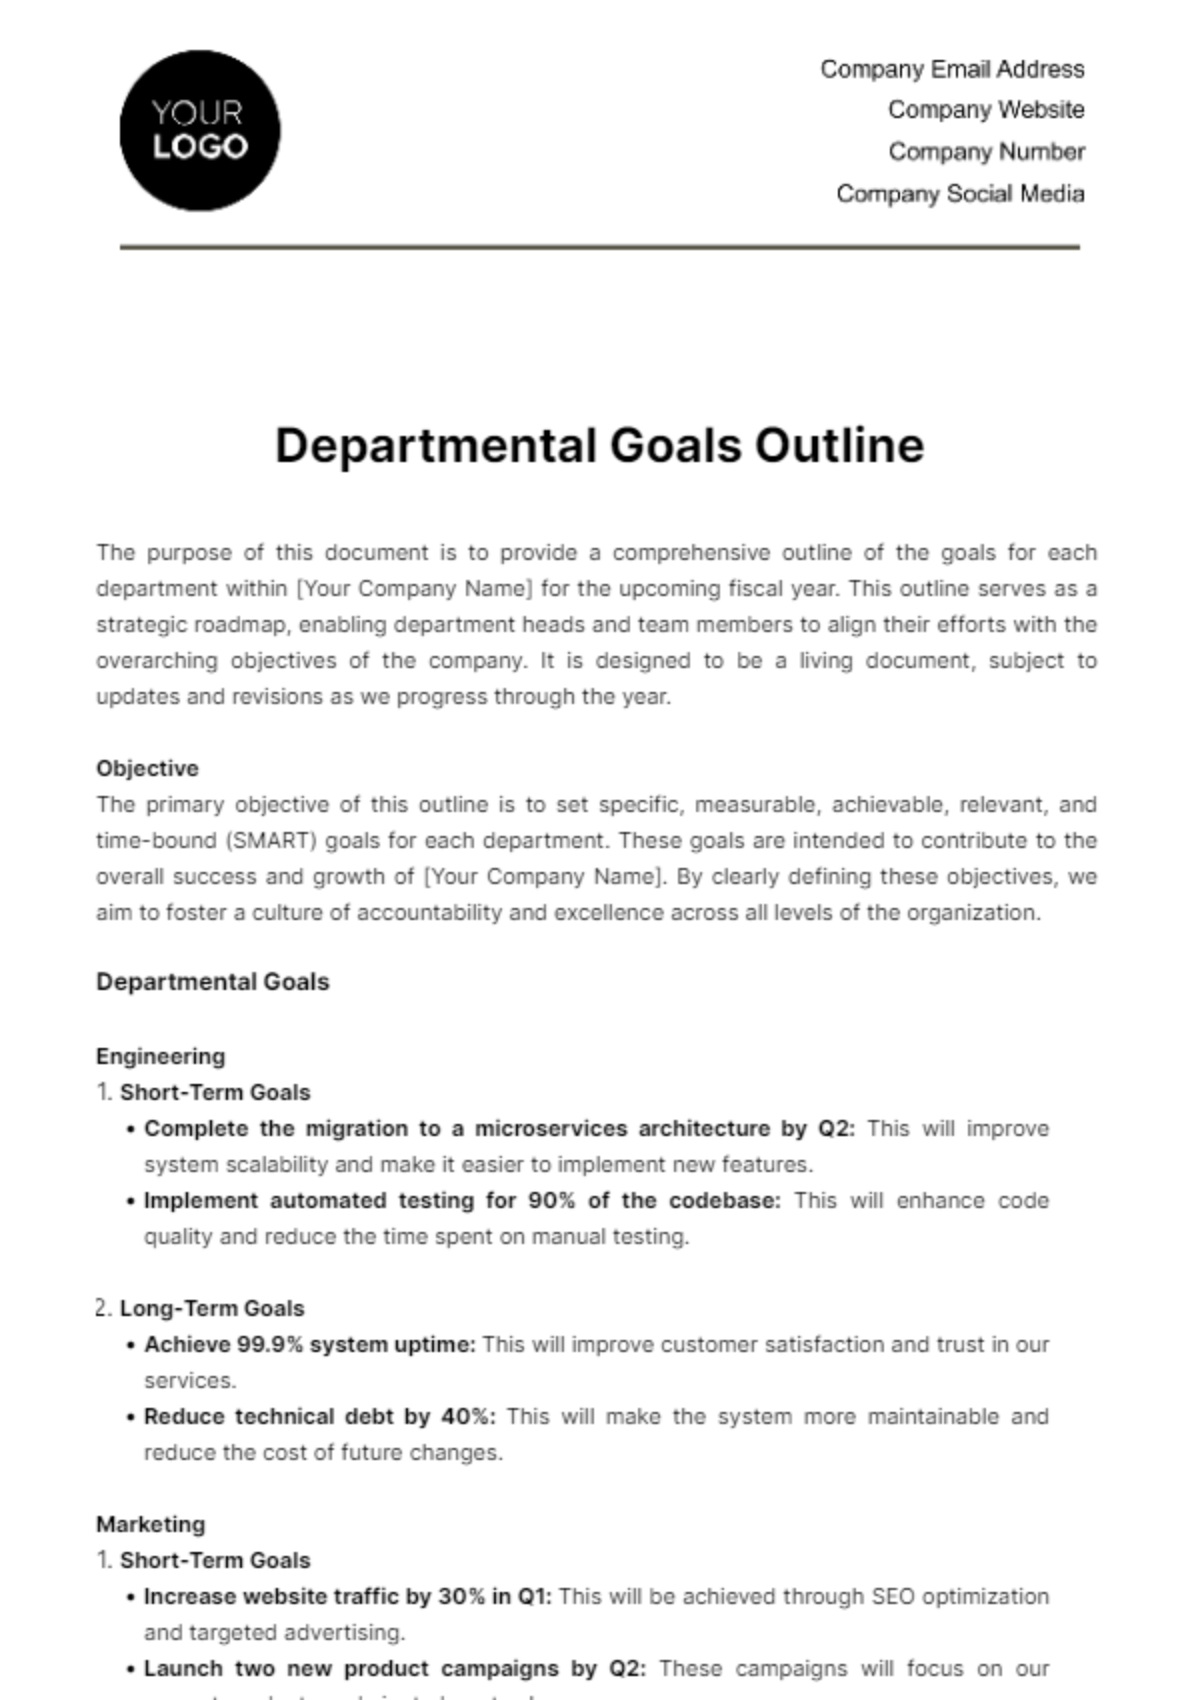 Free Departmental Goals Outline HR Template